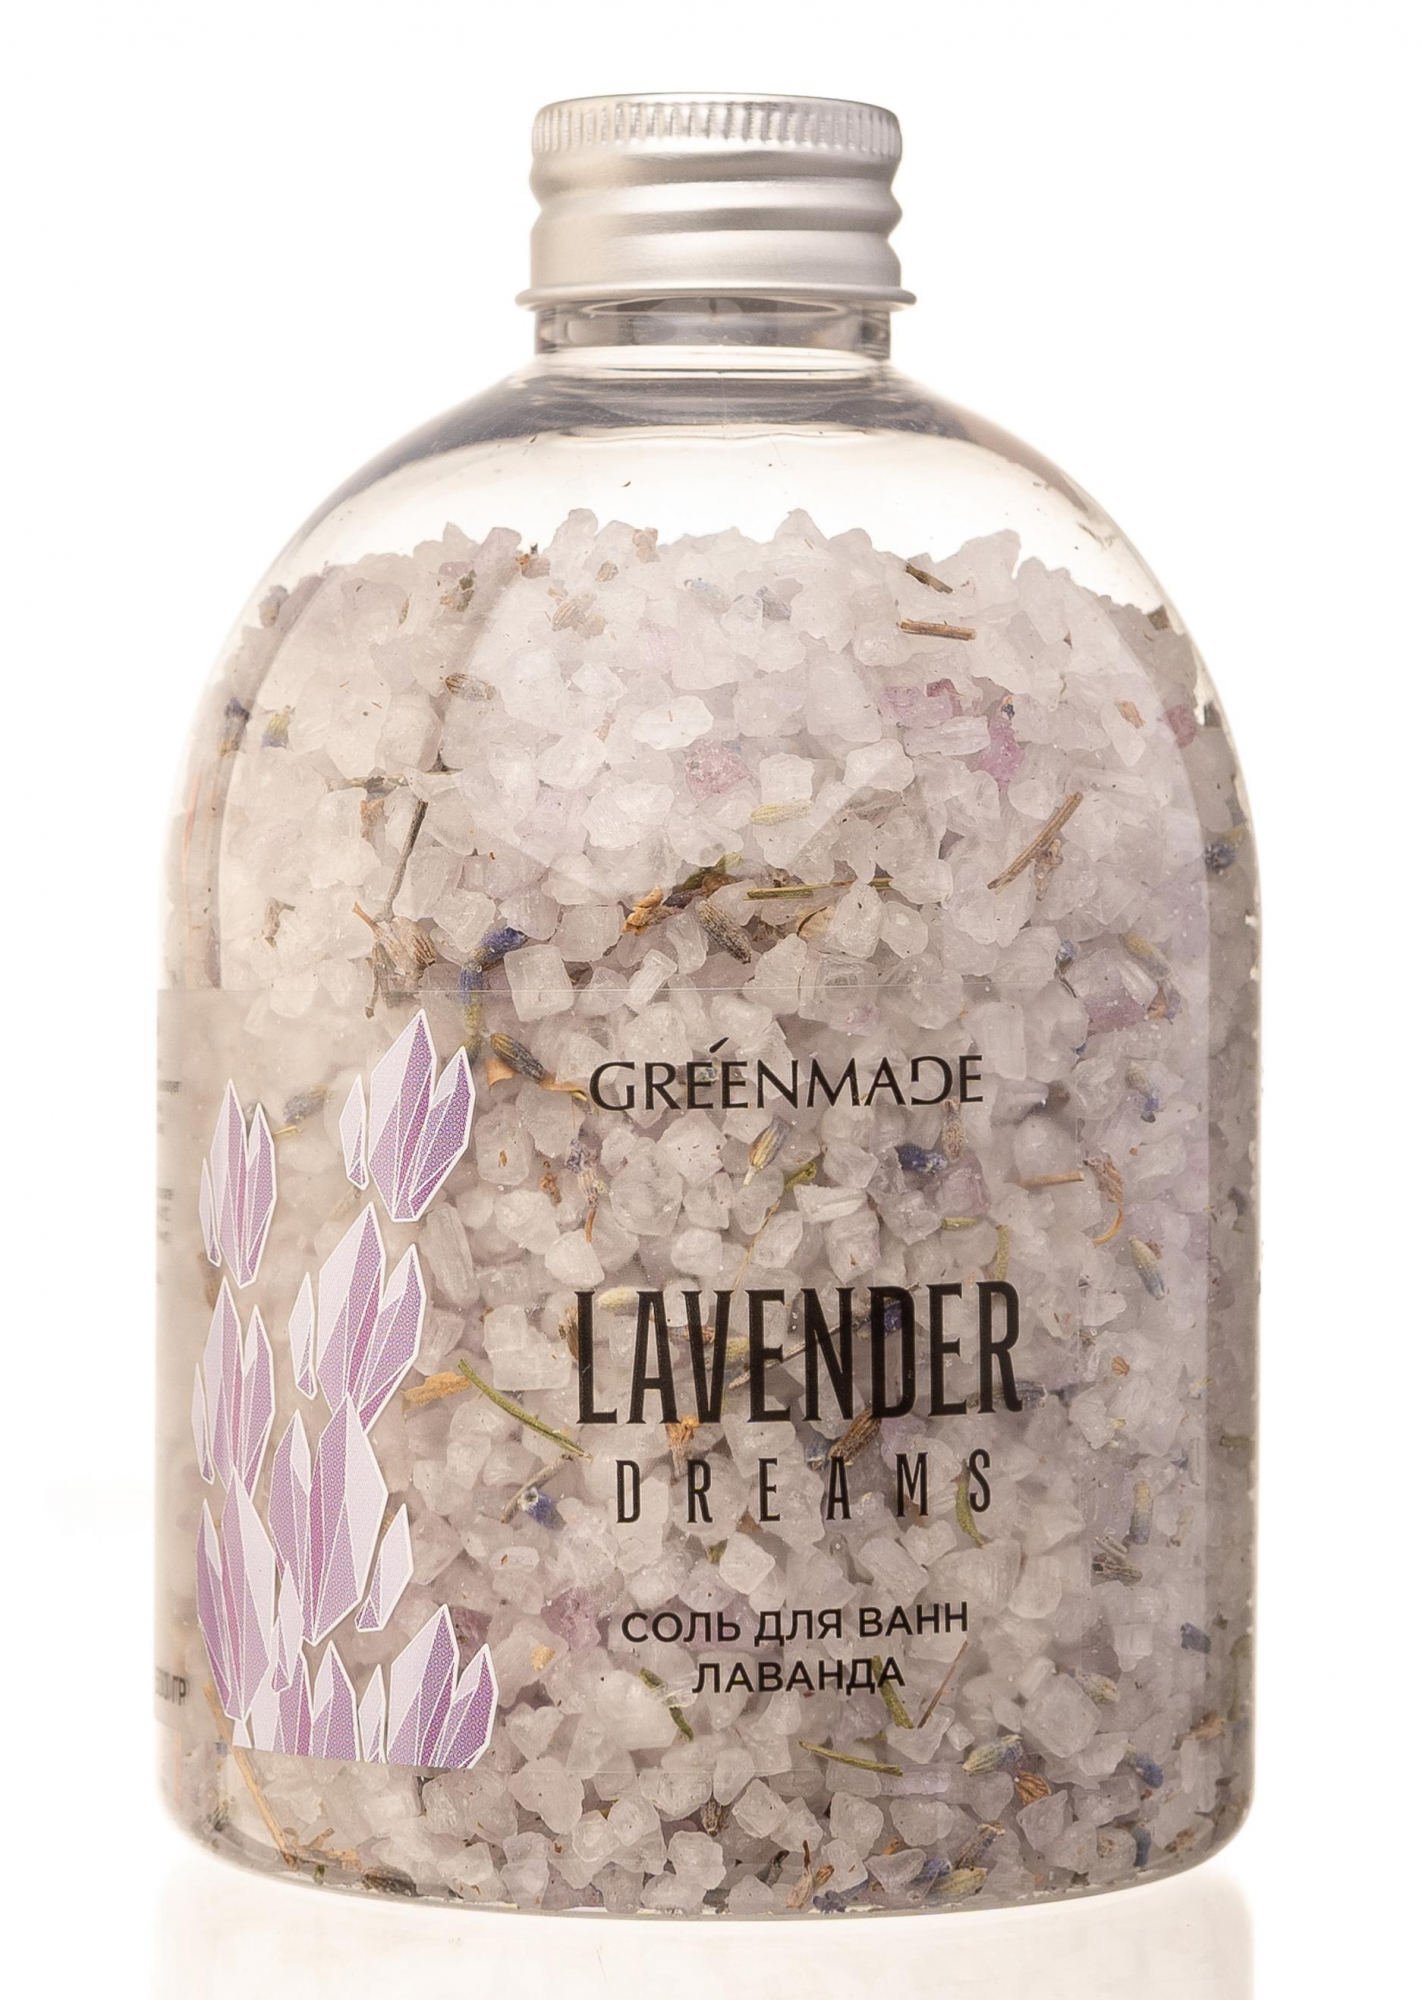 G Соль для ванн Лаванда Lavender dreams купить в онлайн экомаркете